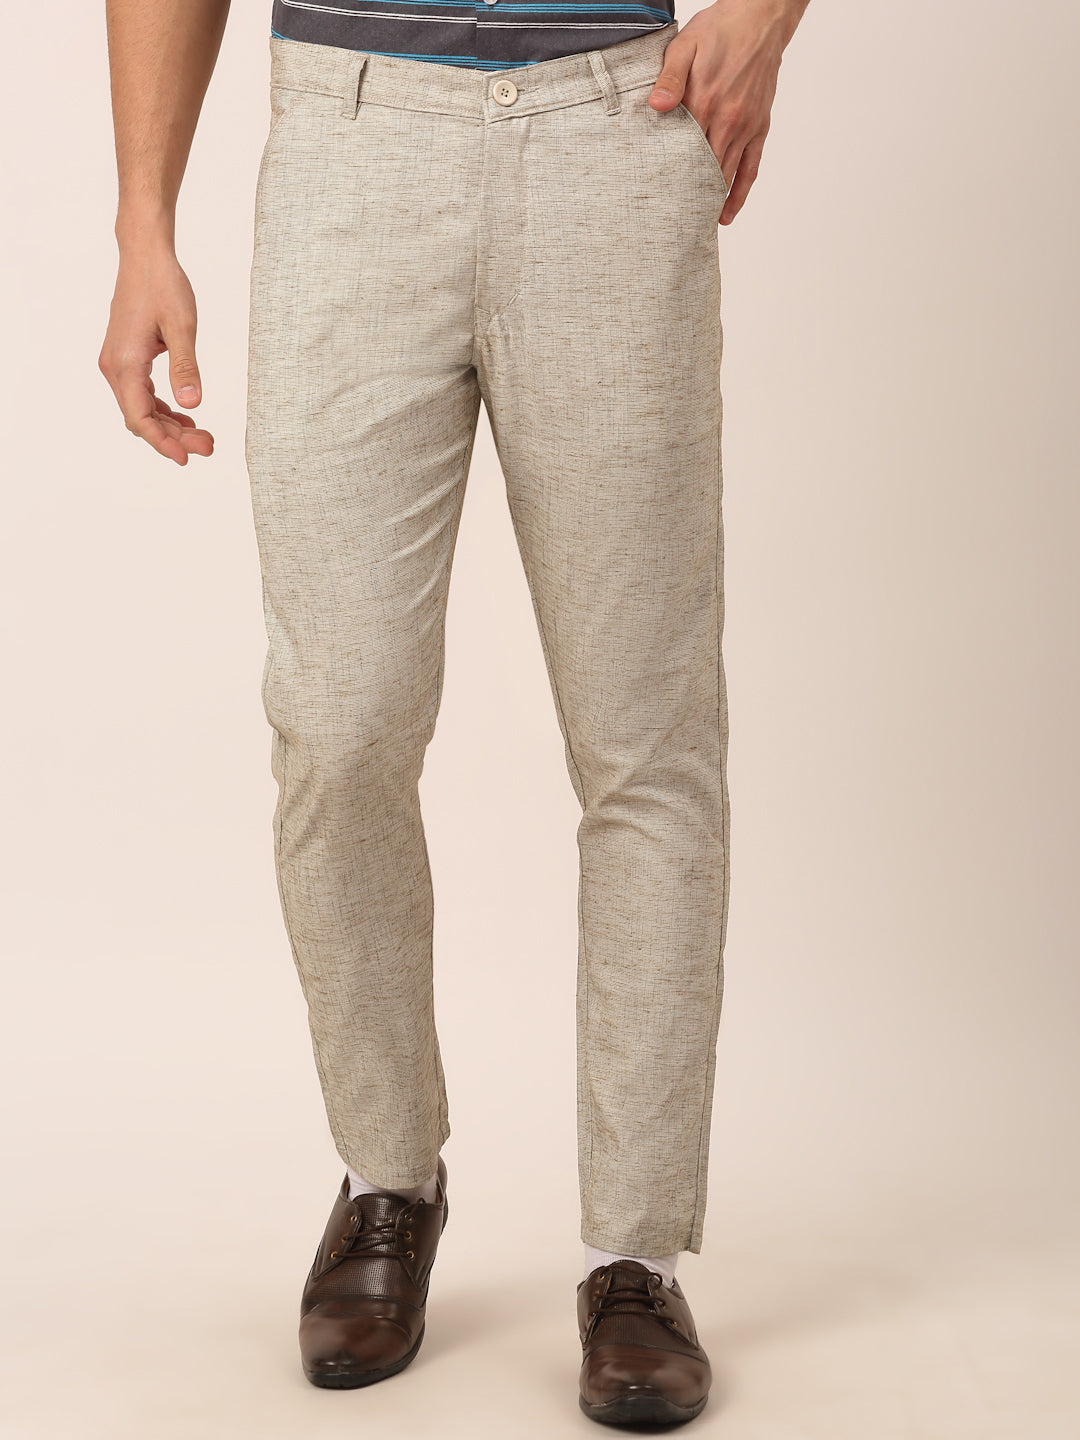 Buy Men Black Solid Slim Fit Casual Trousers Online - 801518 | Peter England